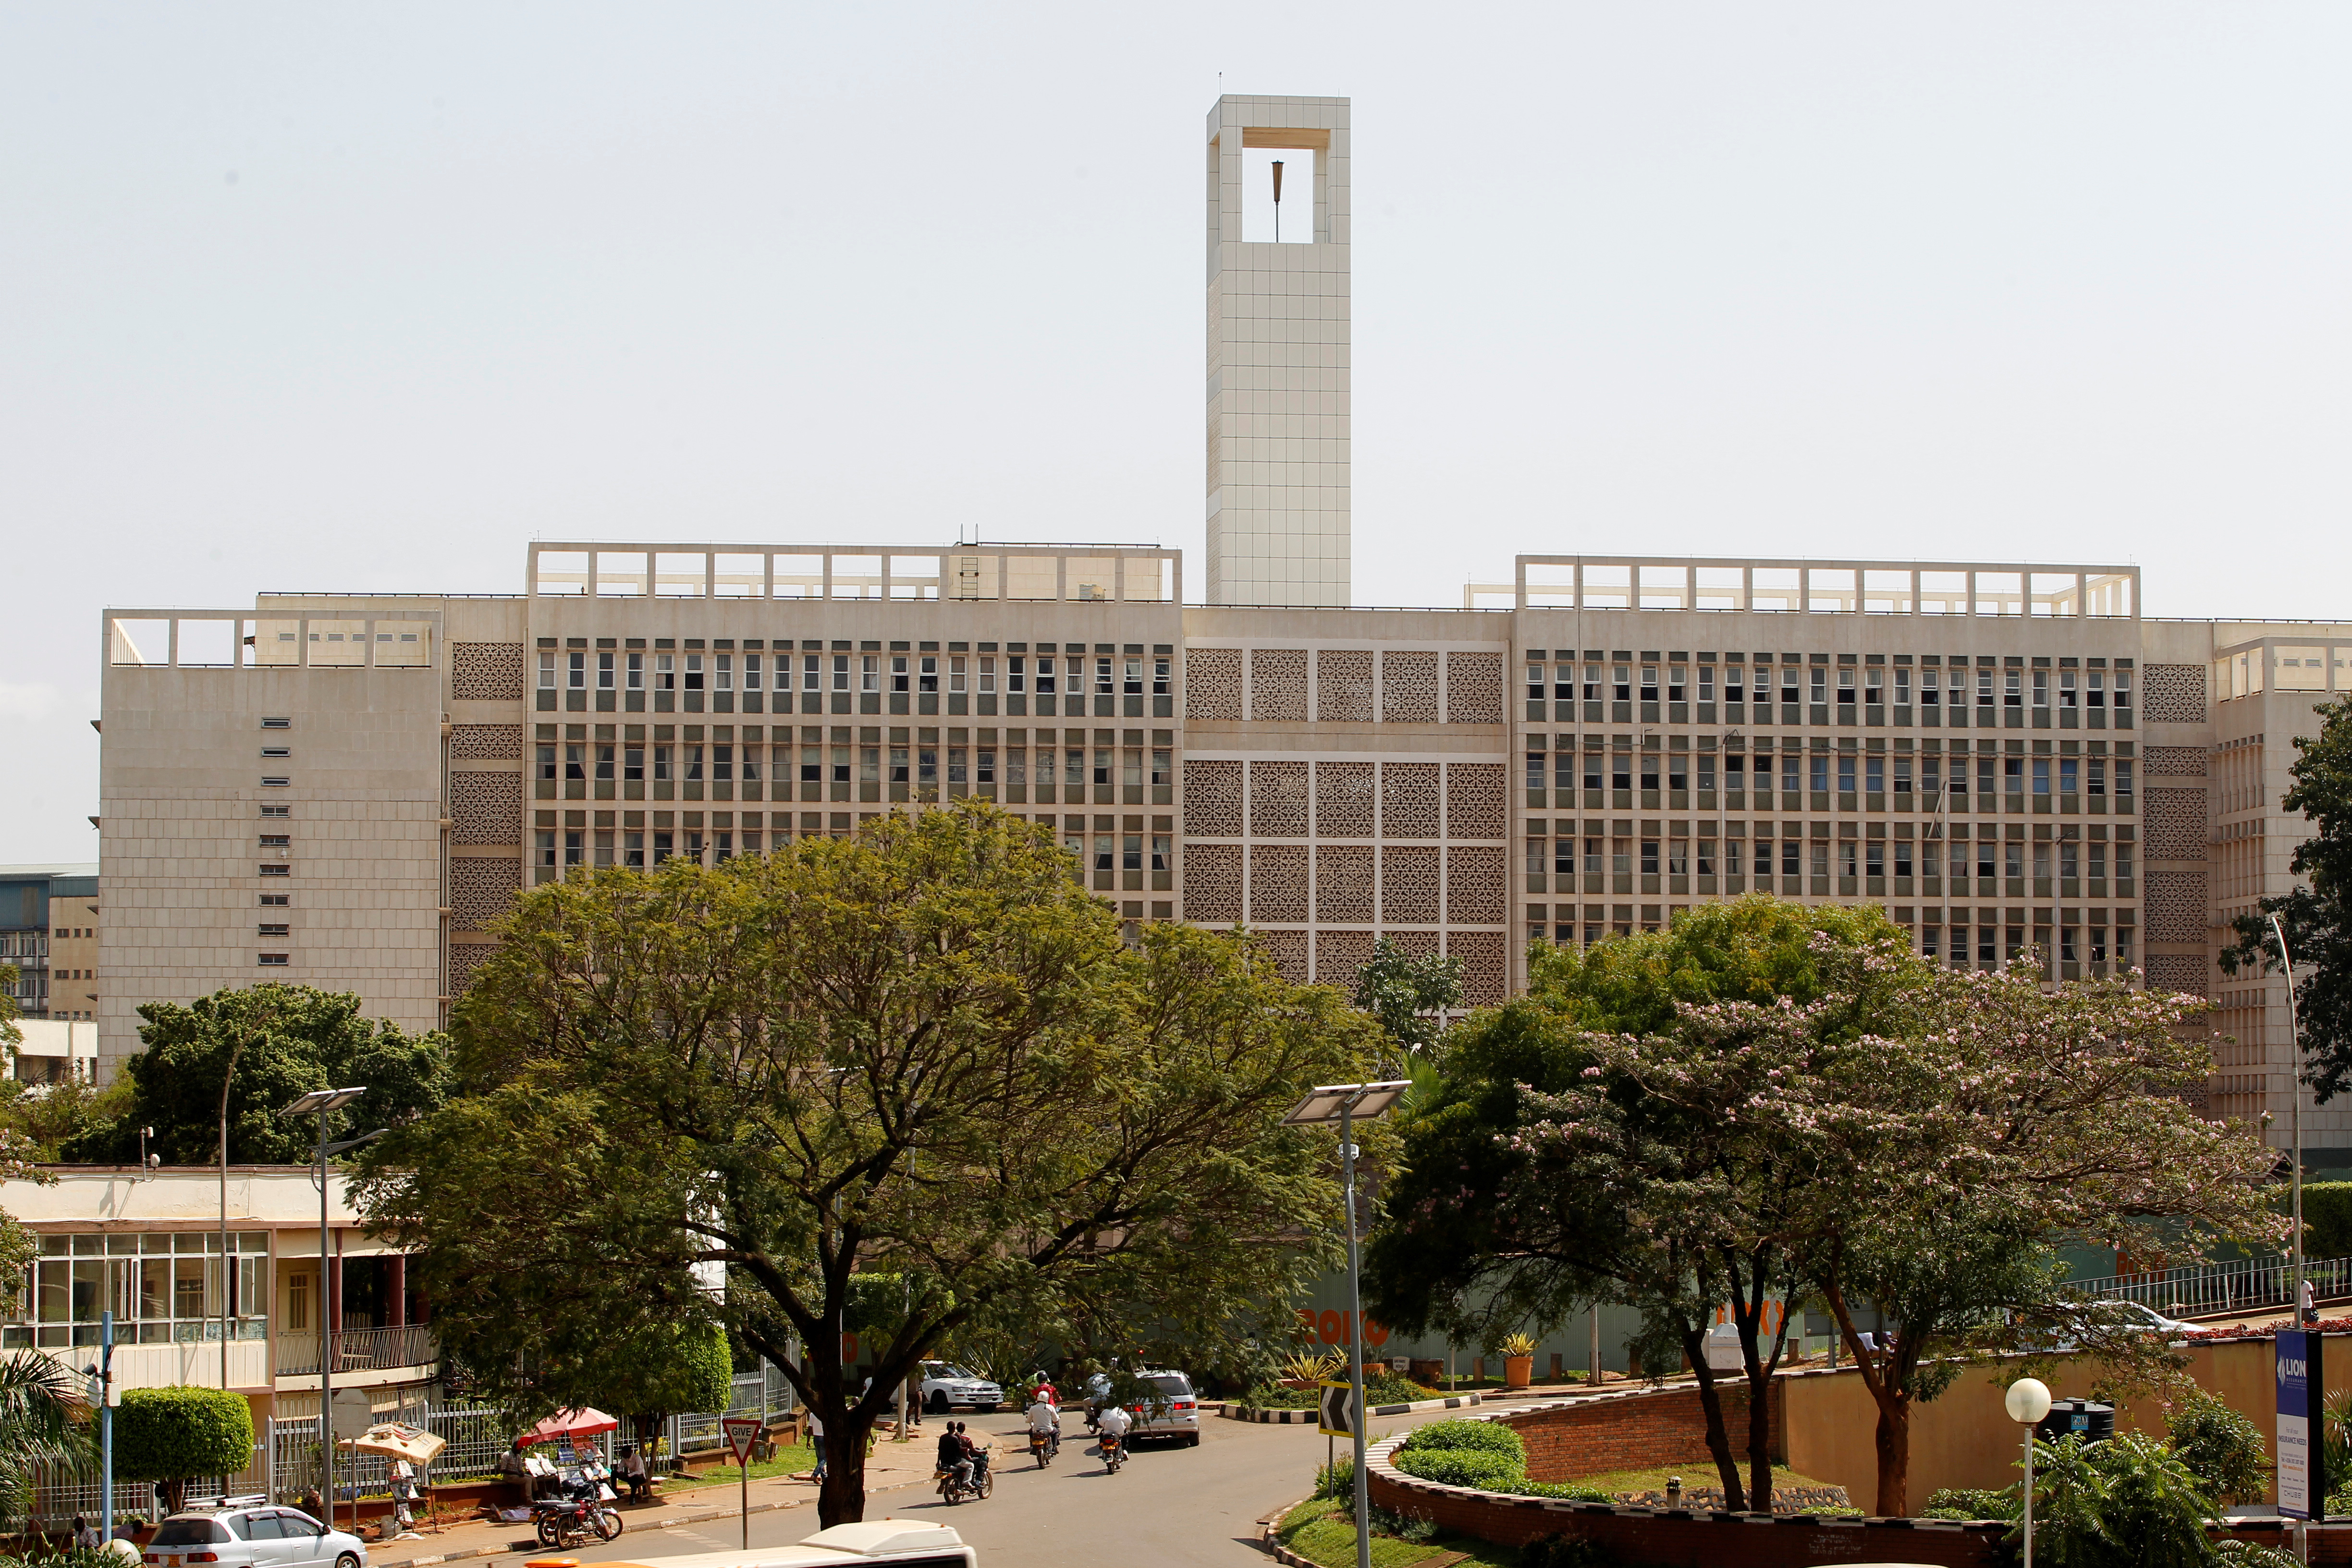 The parliament of the republic of Uganda in capital Kampala